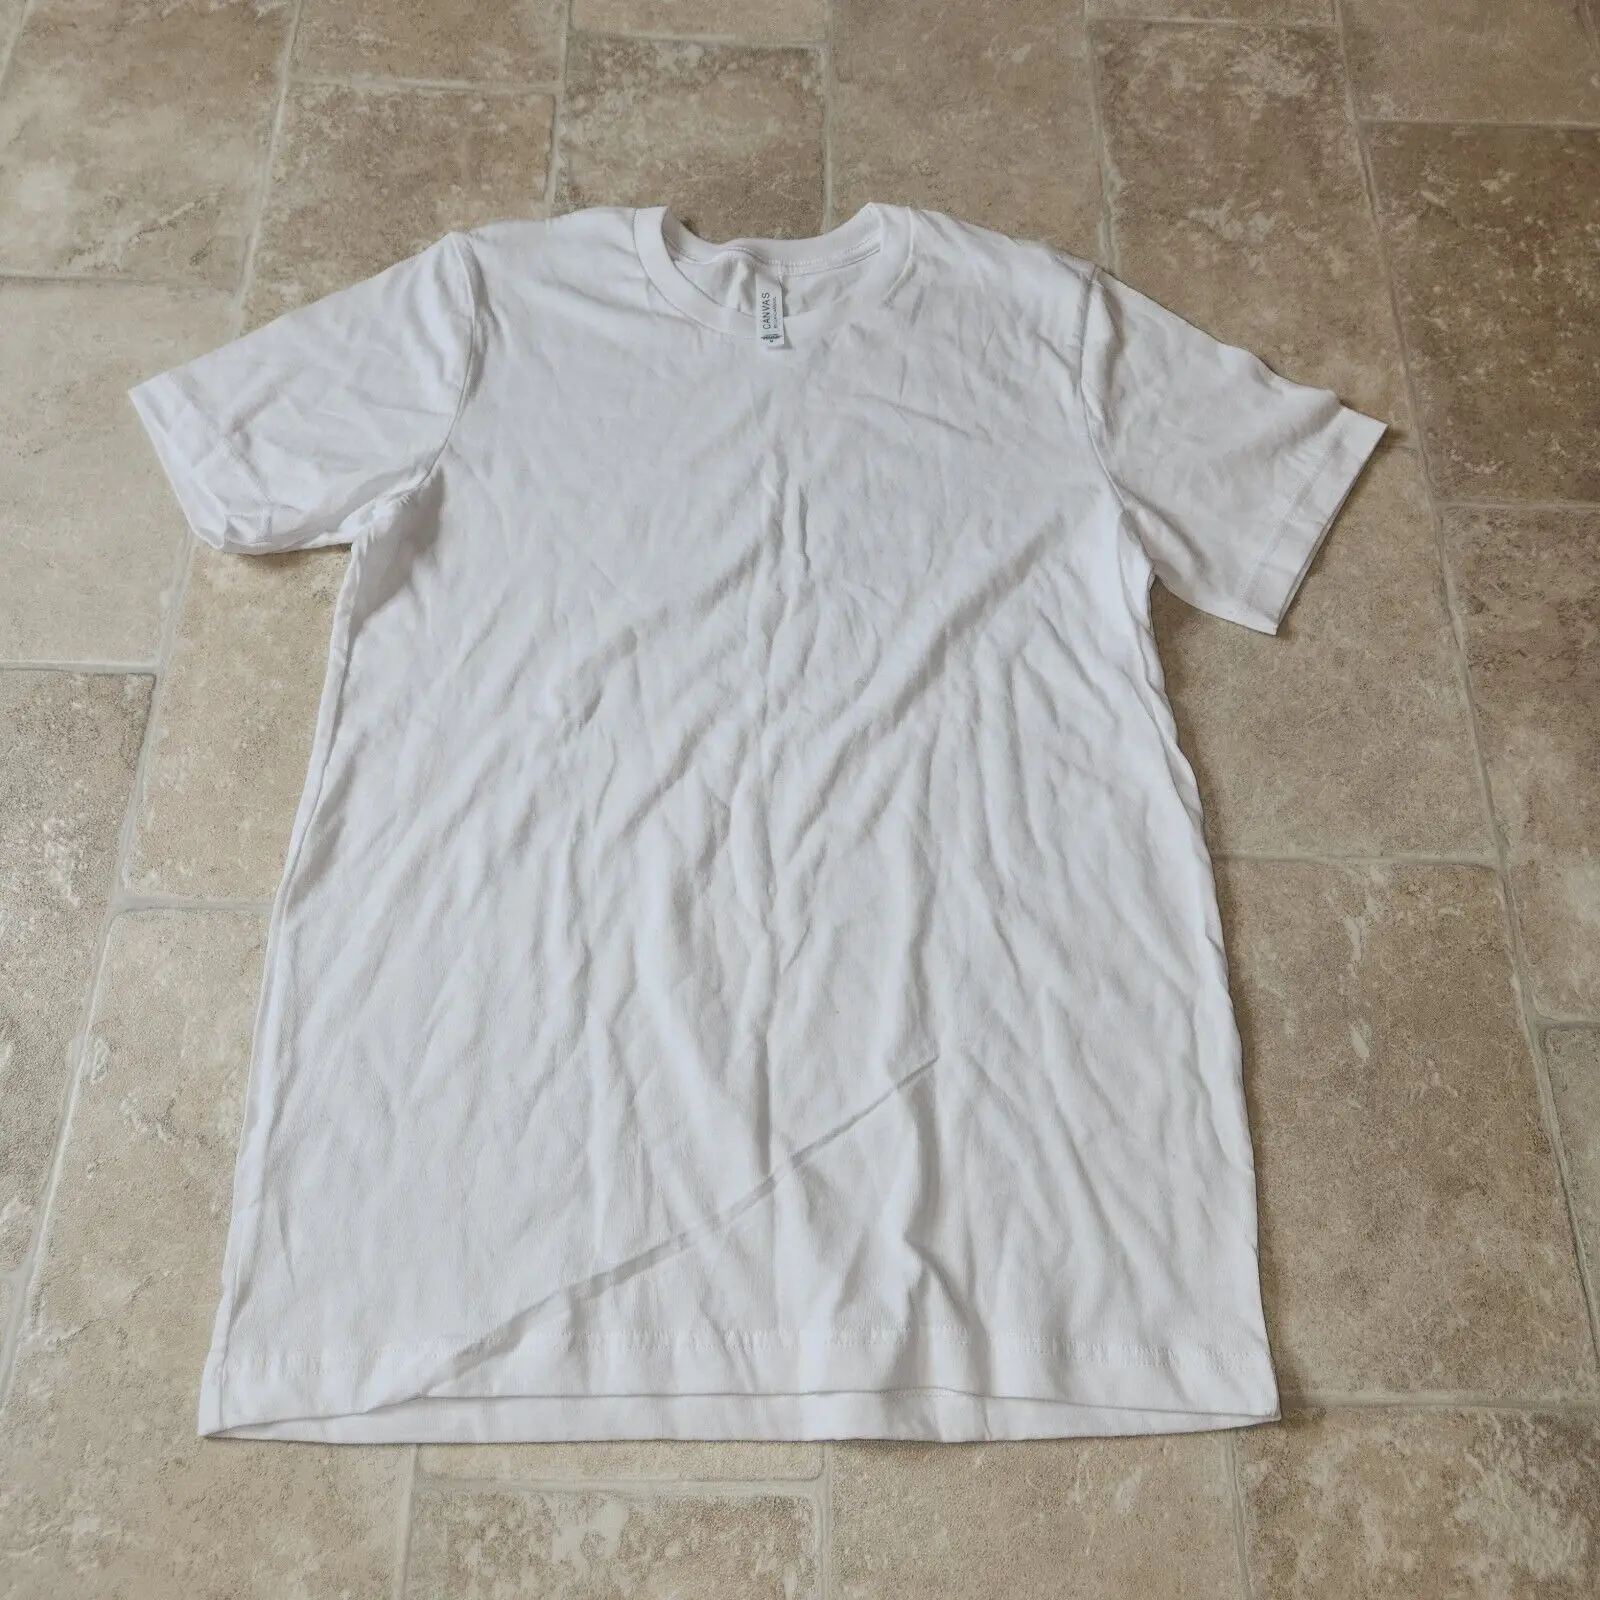 Unisex-Adult DryBlend T-Shirt Style American Apparel Unisex-Adult Tri-Blend Track T Shirt Hanes Cotton Crewneck T Shirt